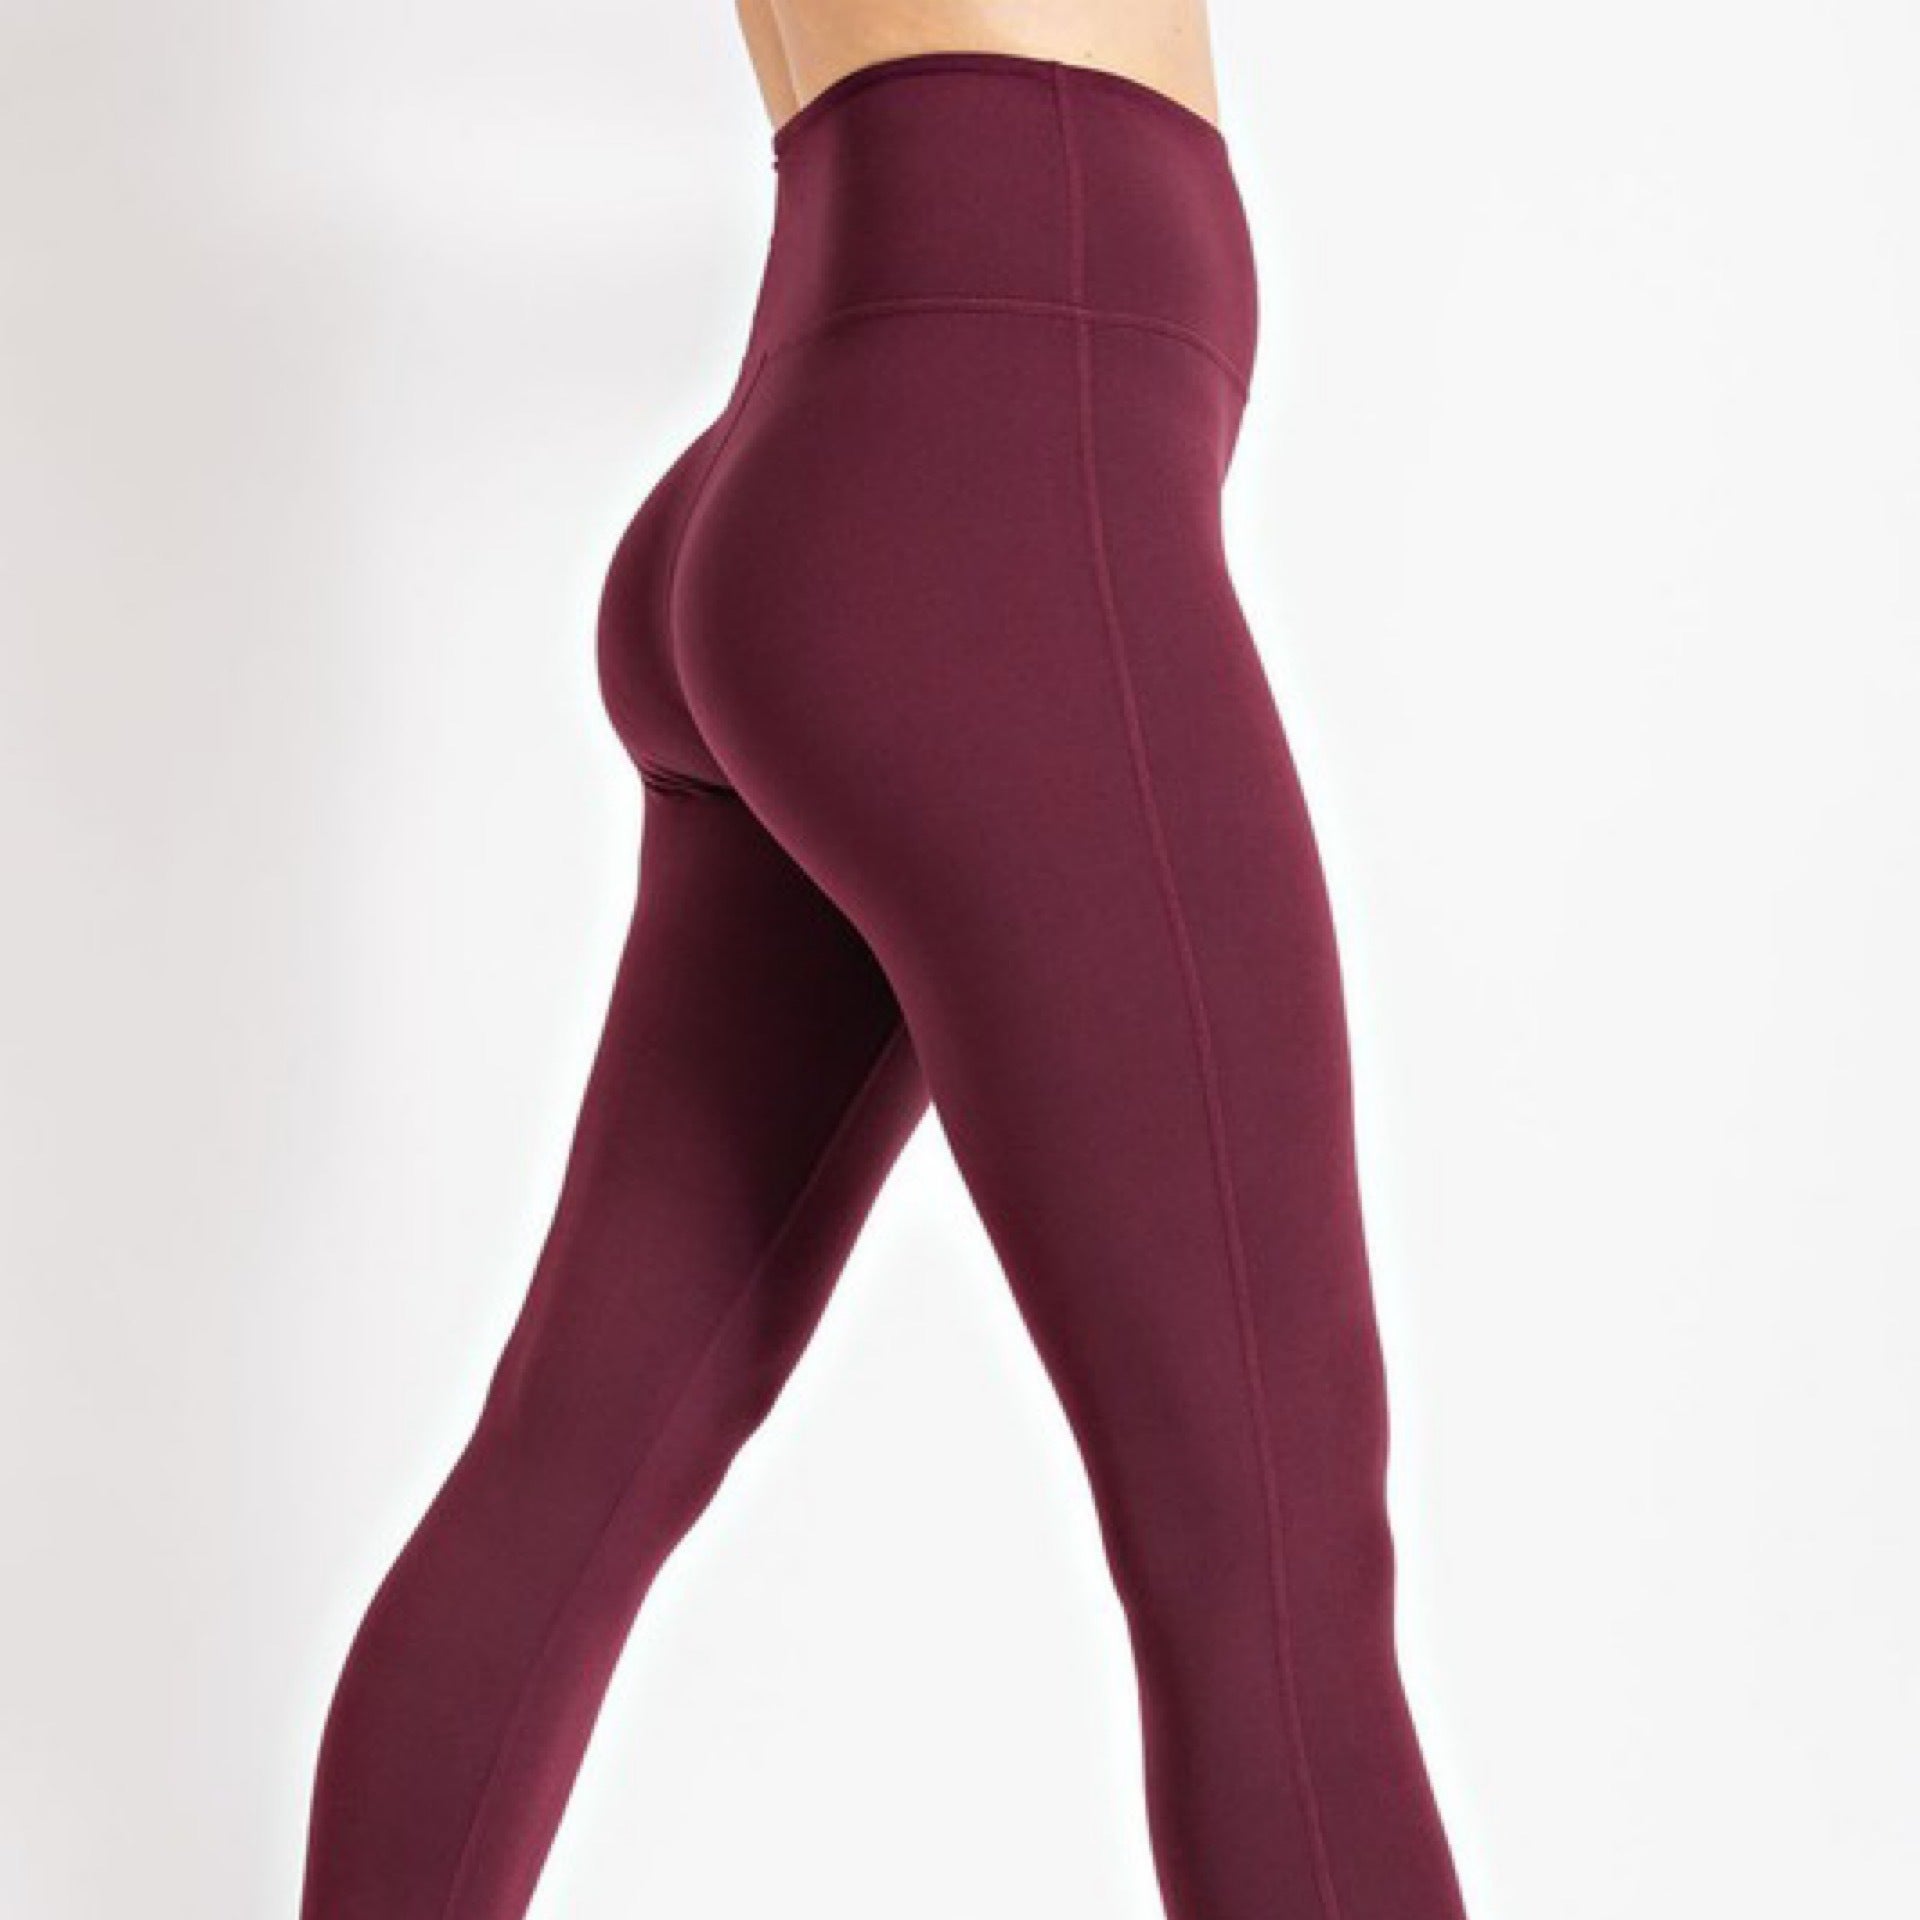 Hfyihgf Women's High Waisted Butt Lift Leggings Soft Tummy Control Fitness  Workout Yoga Pants(Black,L) - Walmart.com